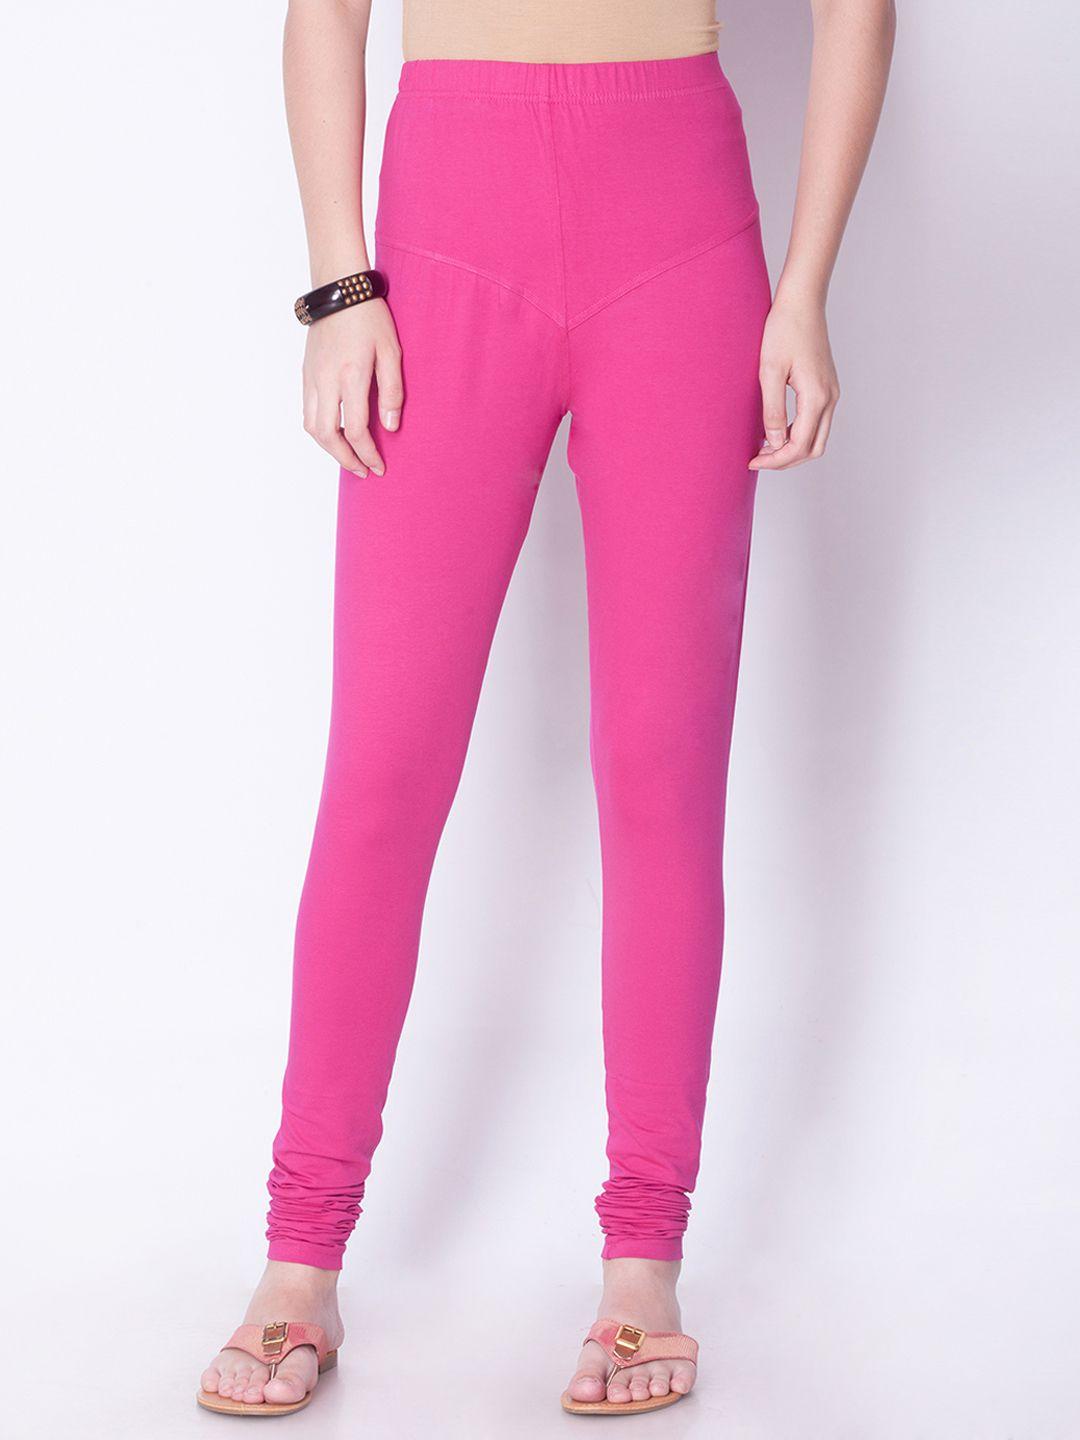 dollar-missy-women-pink-solid-churidar-leggings